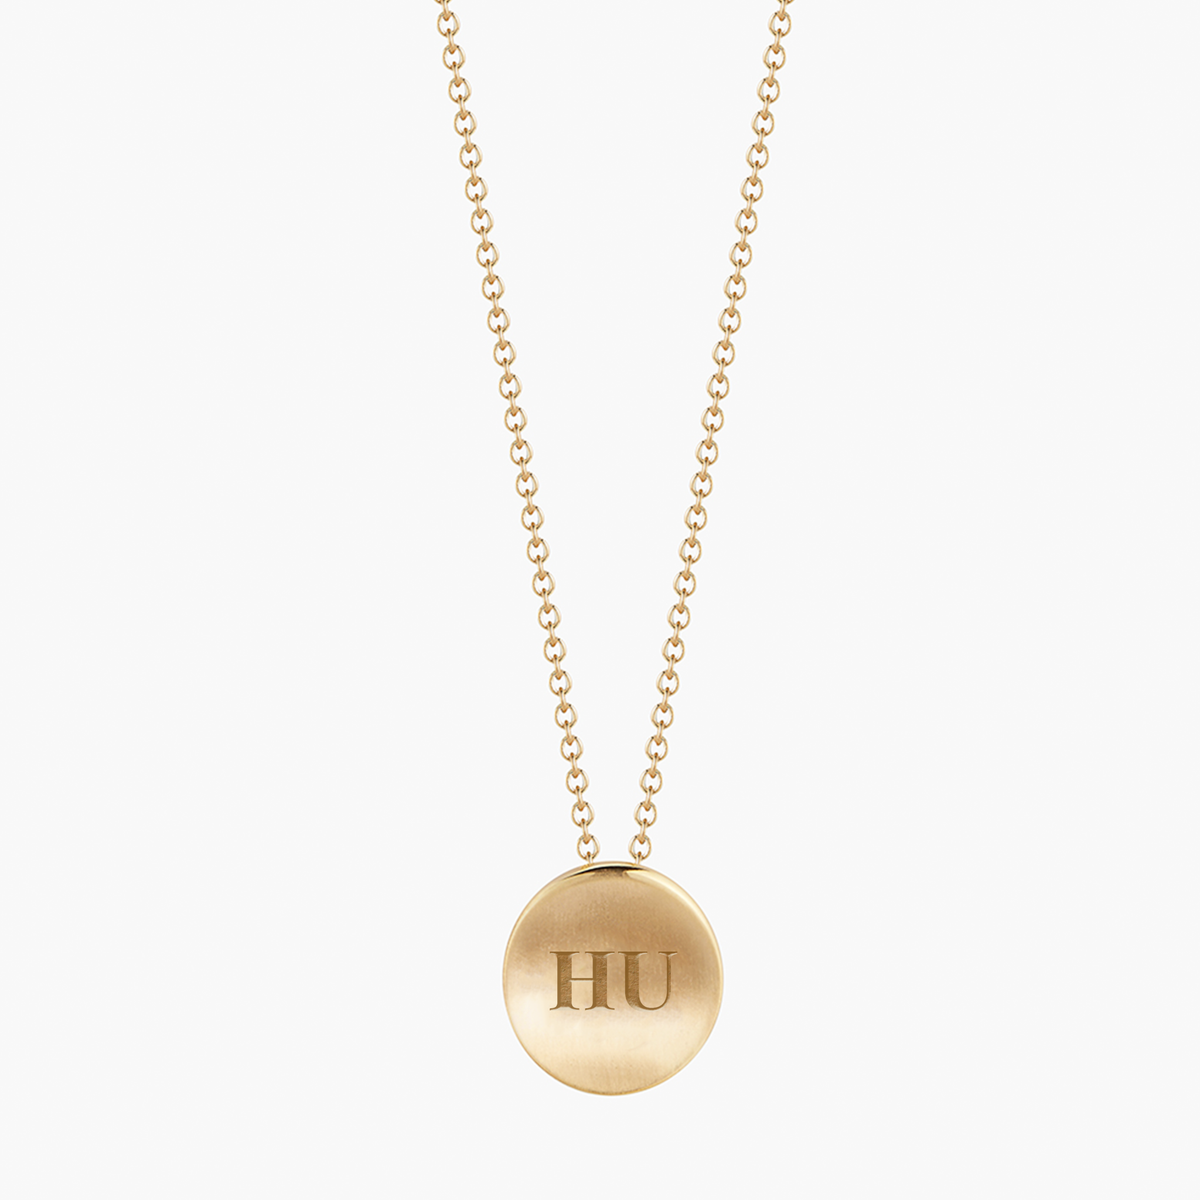 Howard HU Organic Petite Necklace in Cavan Gold and 14K Gold